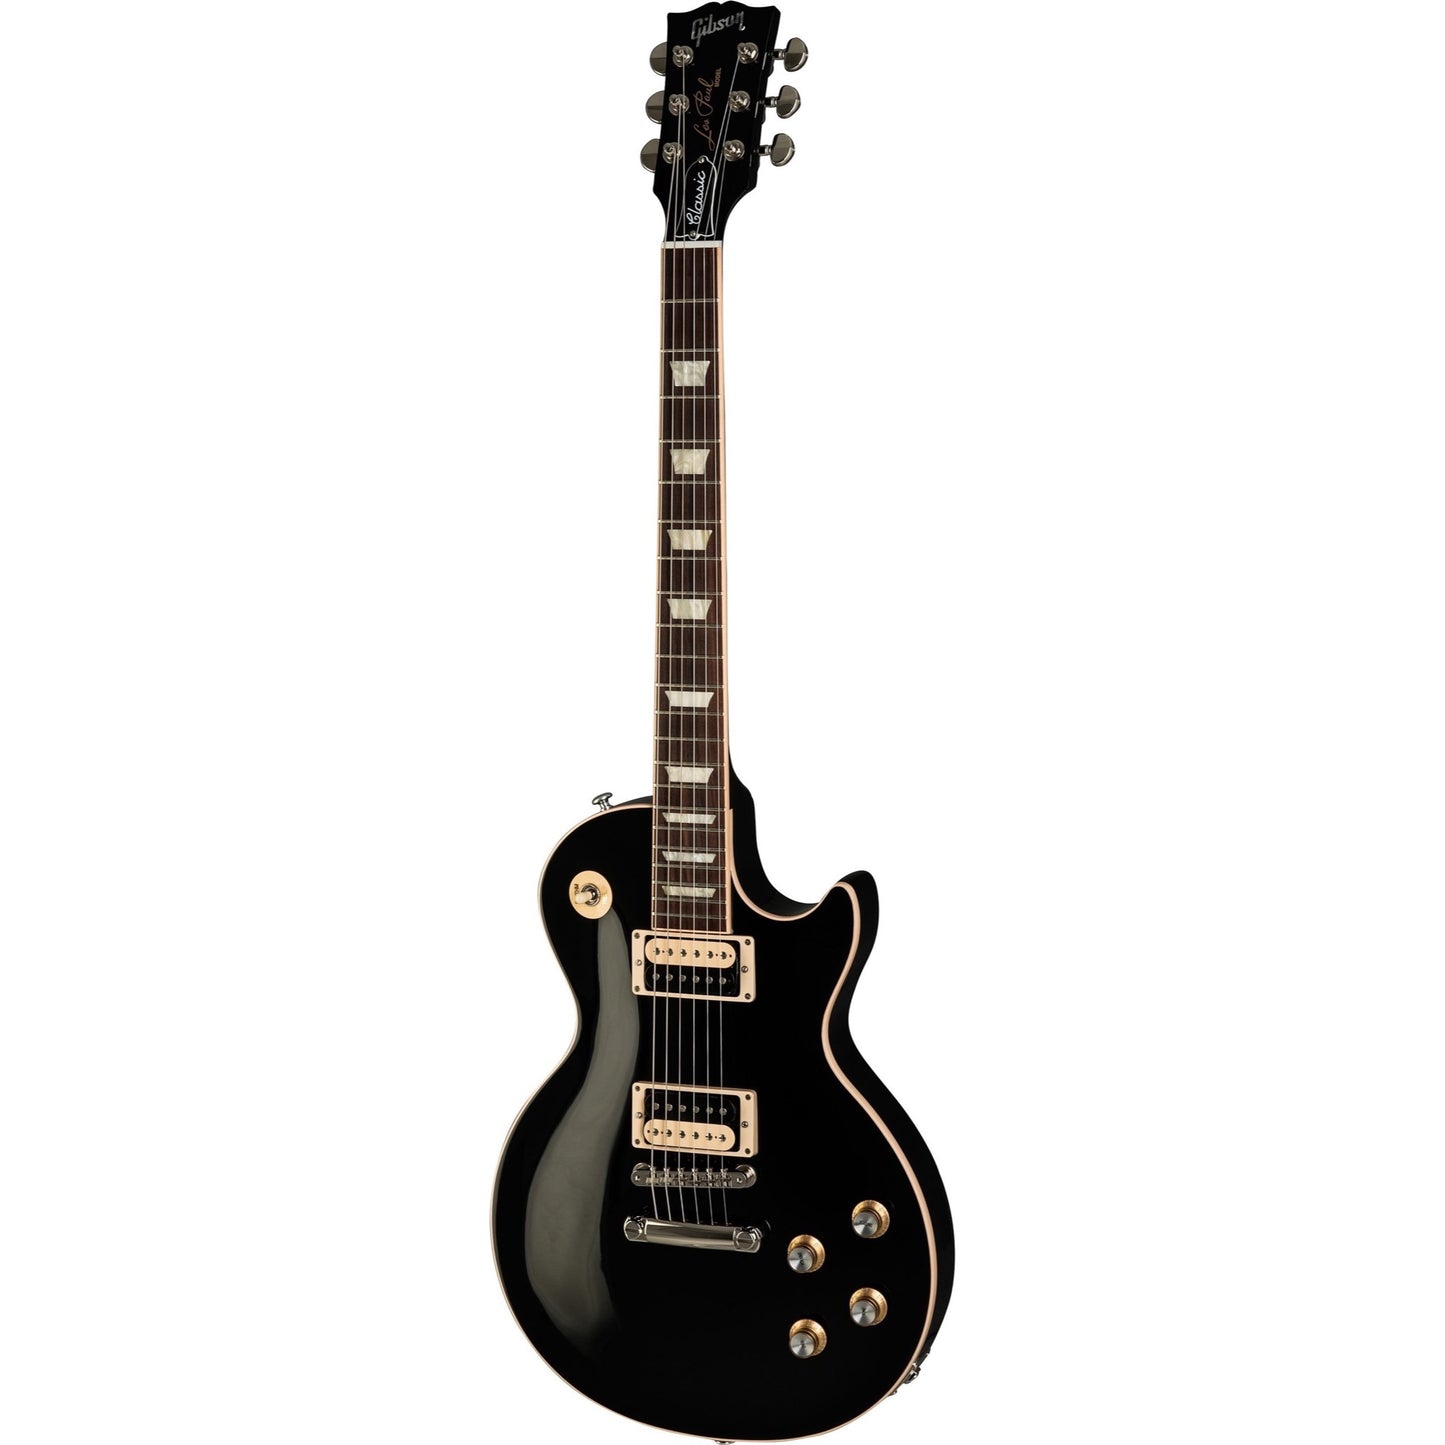 Gibson Les Paul Classic Electric Guitar, Ebony